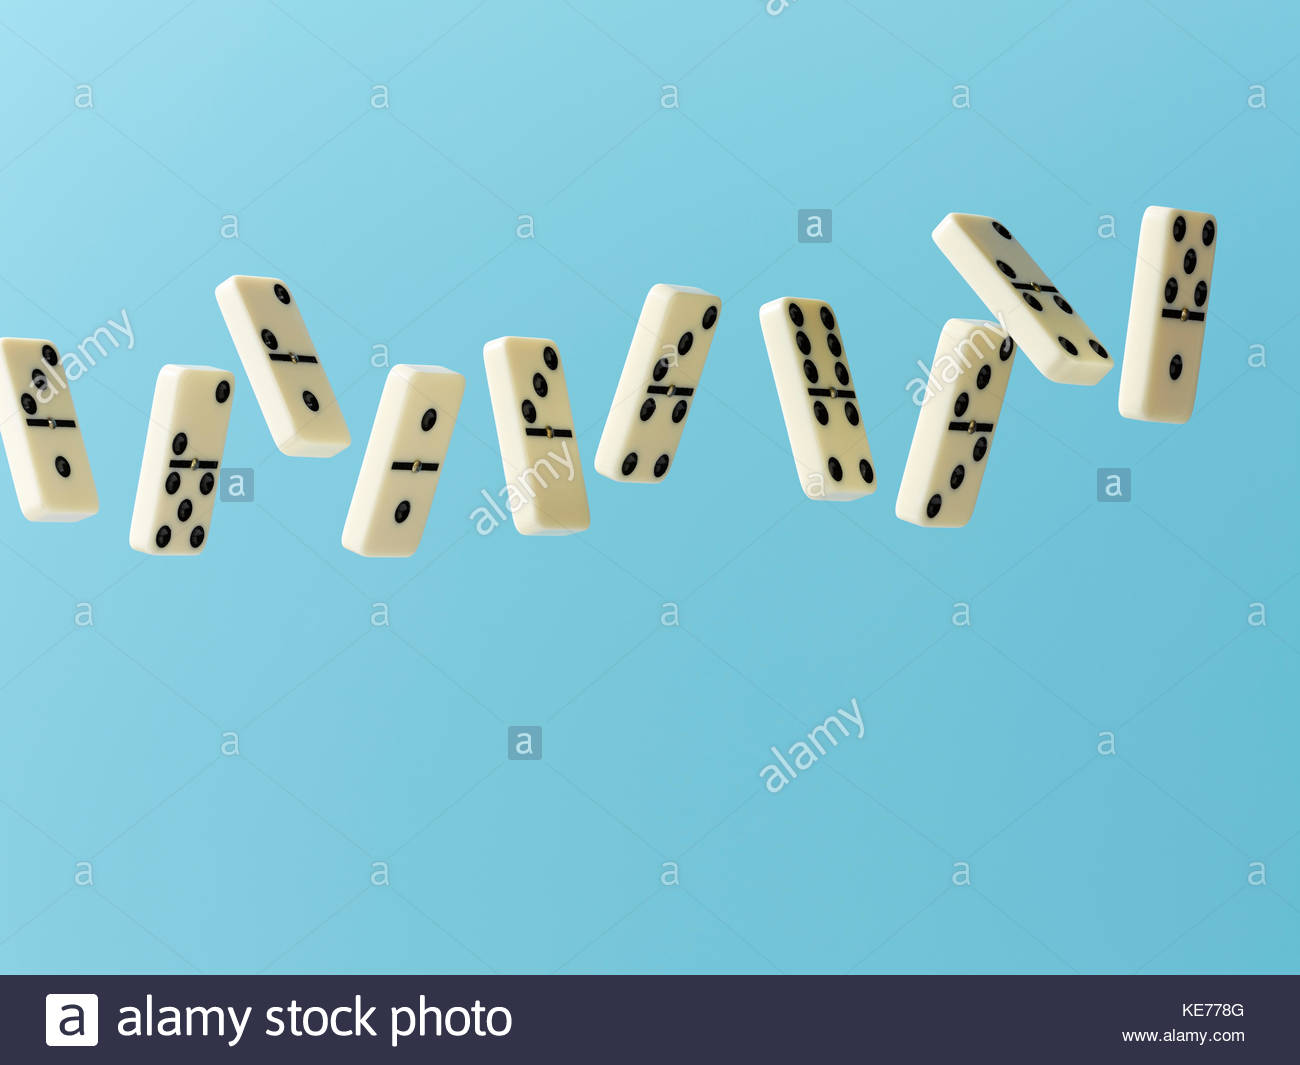 Floating dominos on blue background Stock Photo 163657888   Alamy